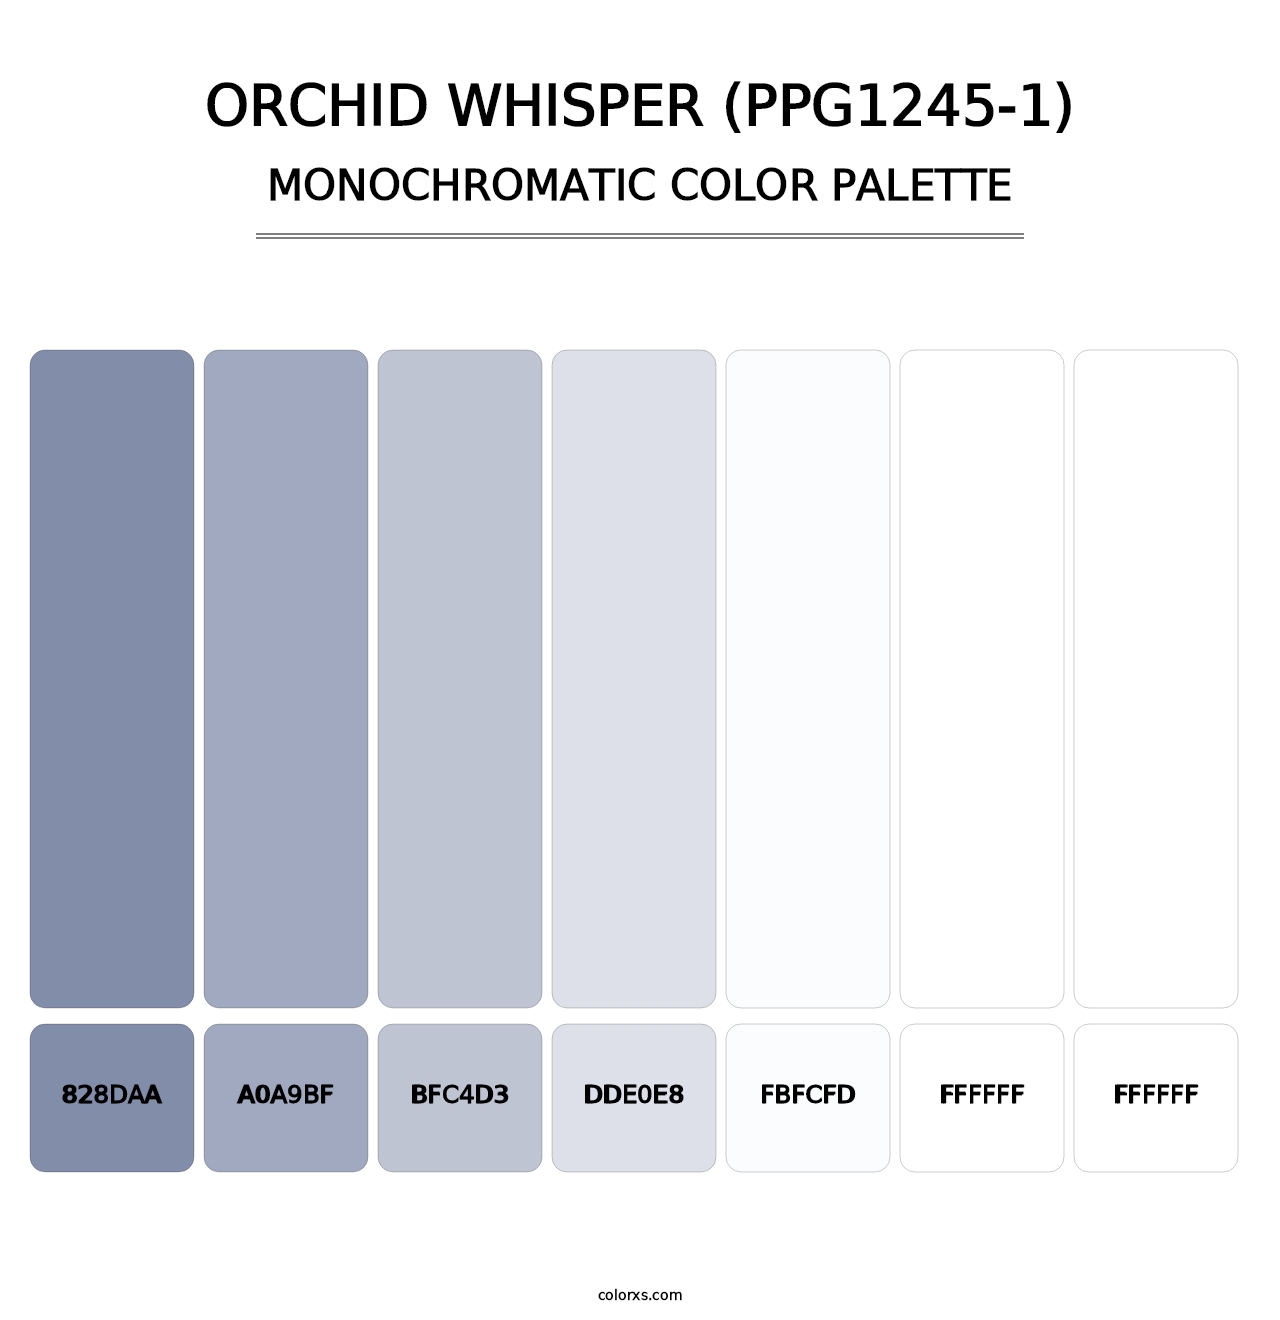 Orchid Whisper (PPG1245-1) - Monochromatic Color Palette